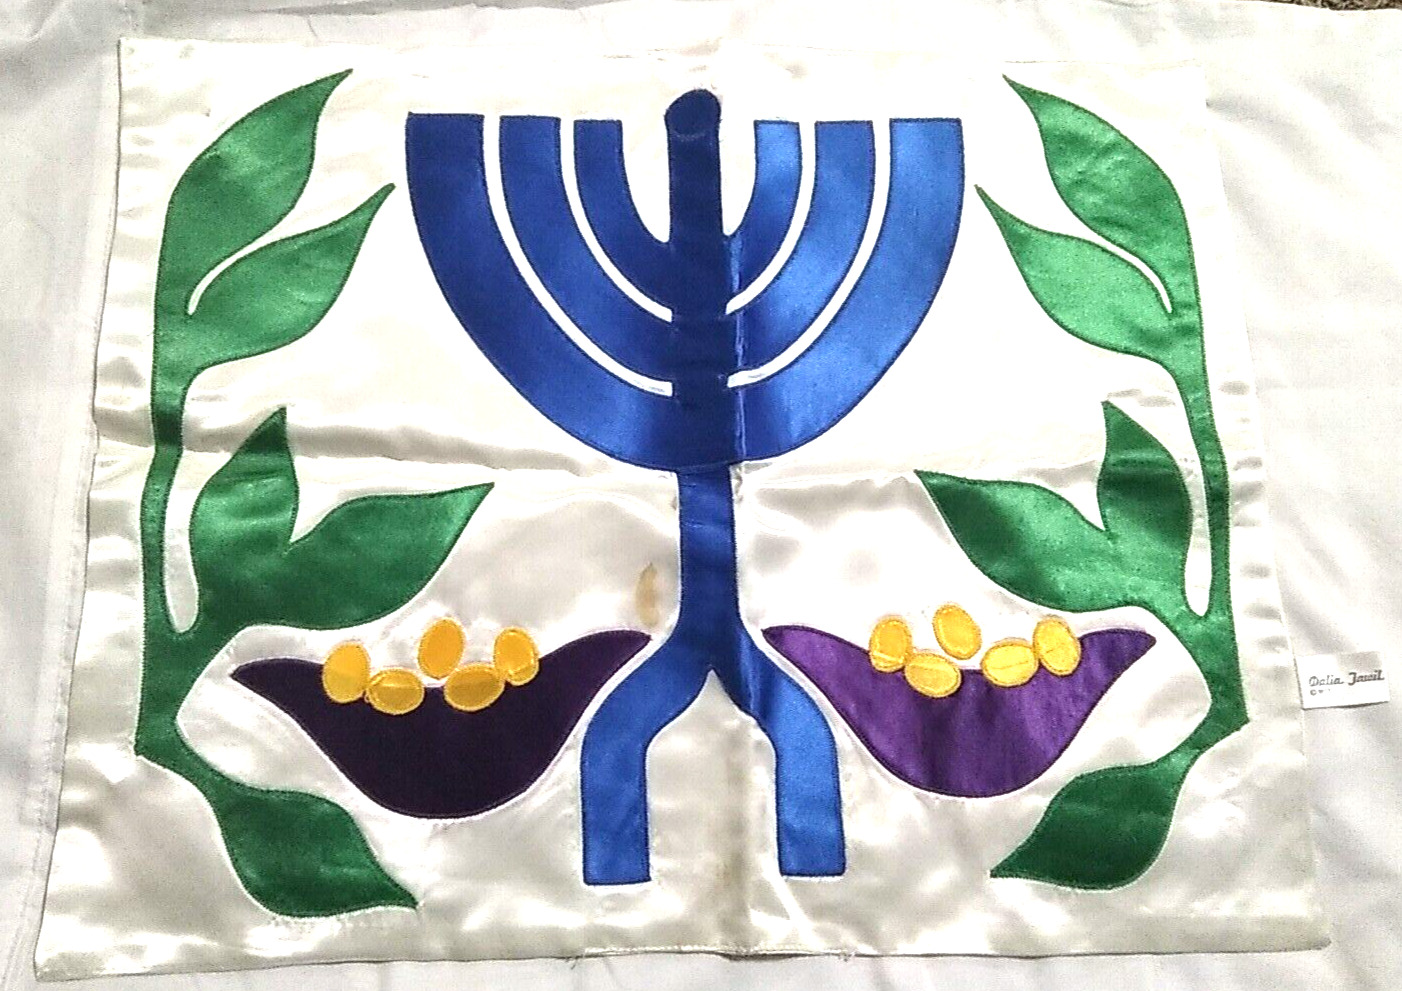 VTG Dalia Jawil Handmade Embroidered Judaica Hebrew CHALLAH BREAD Cover Jewish